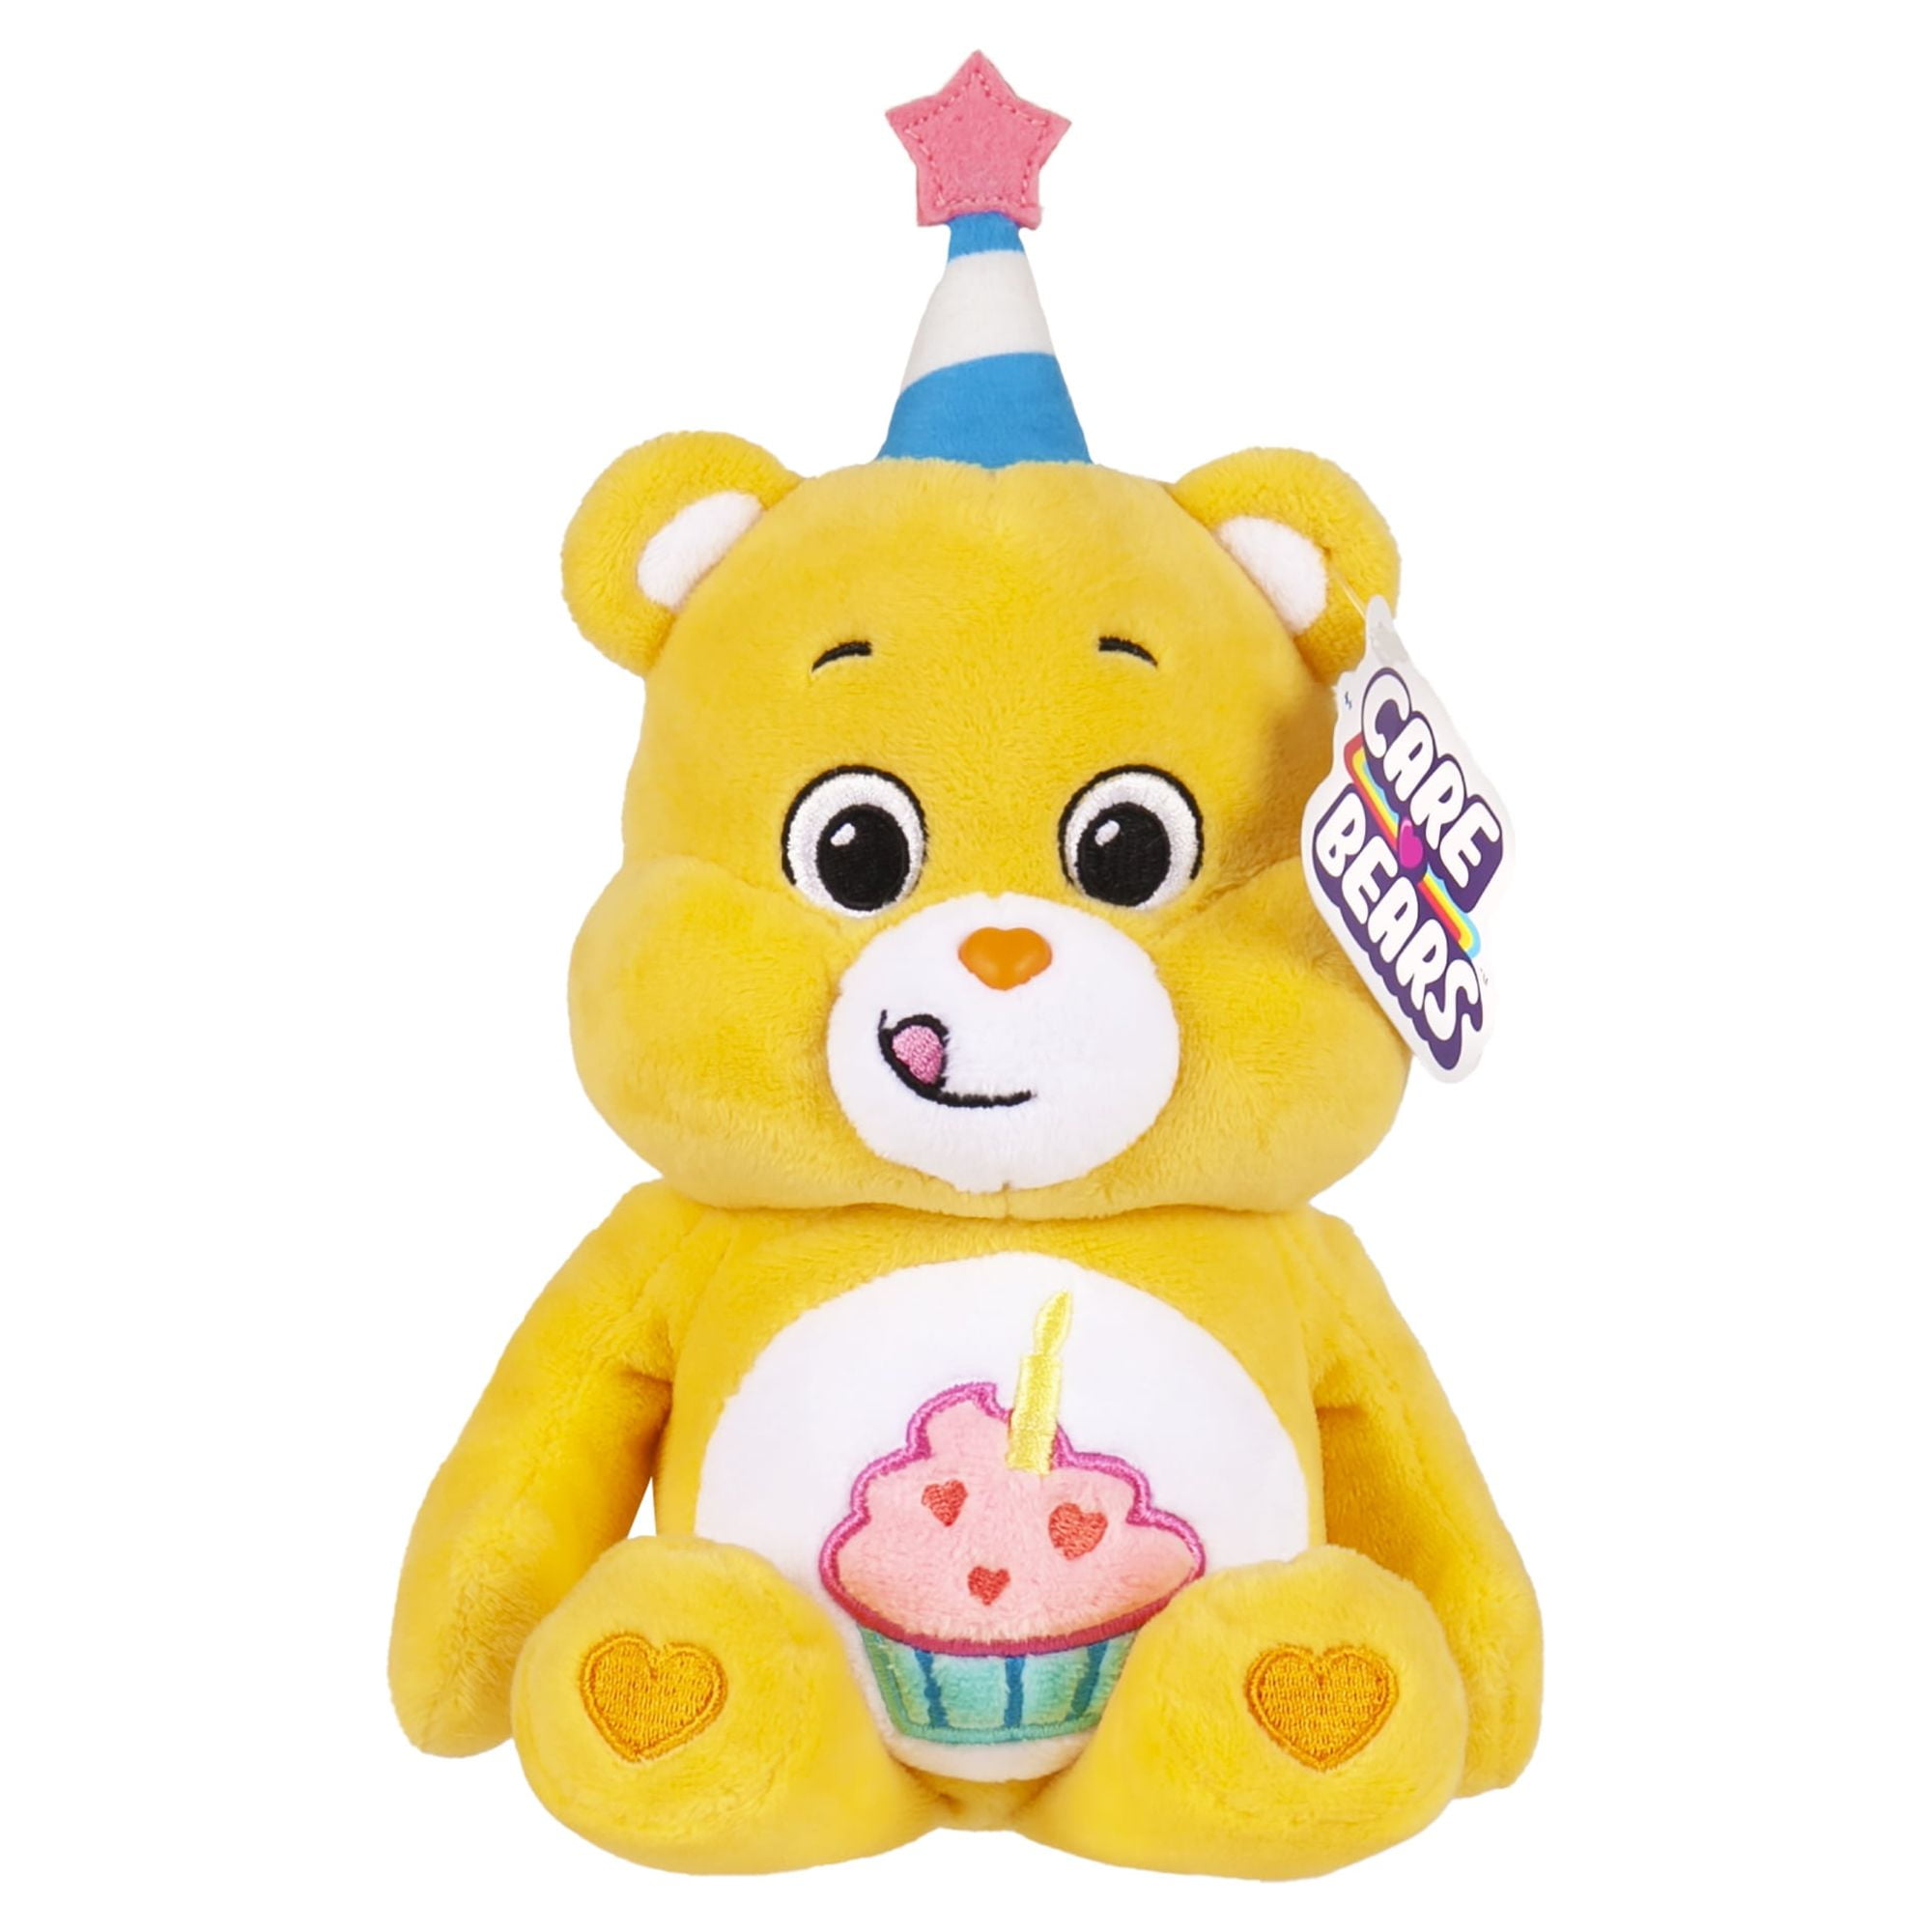 plush Care Bears 9 Bean (Glitter Belly) - Birthday Bear - Soft Huggable  Material!, Small